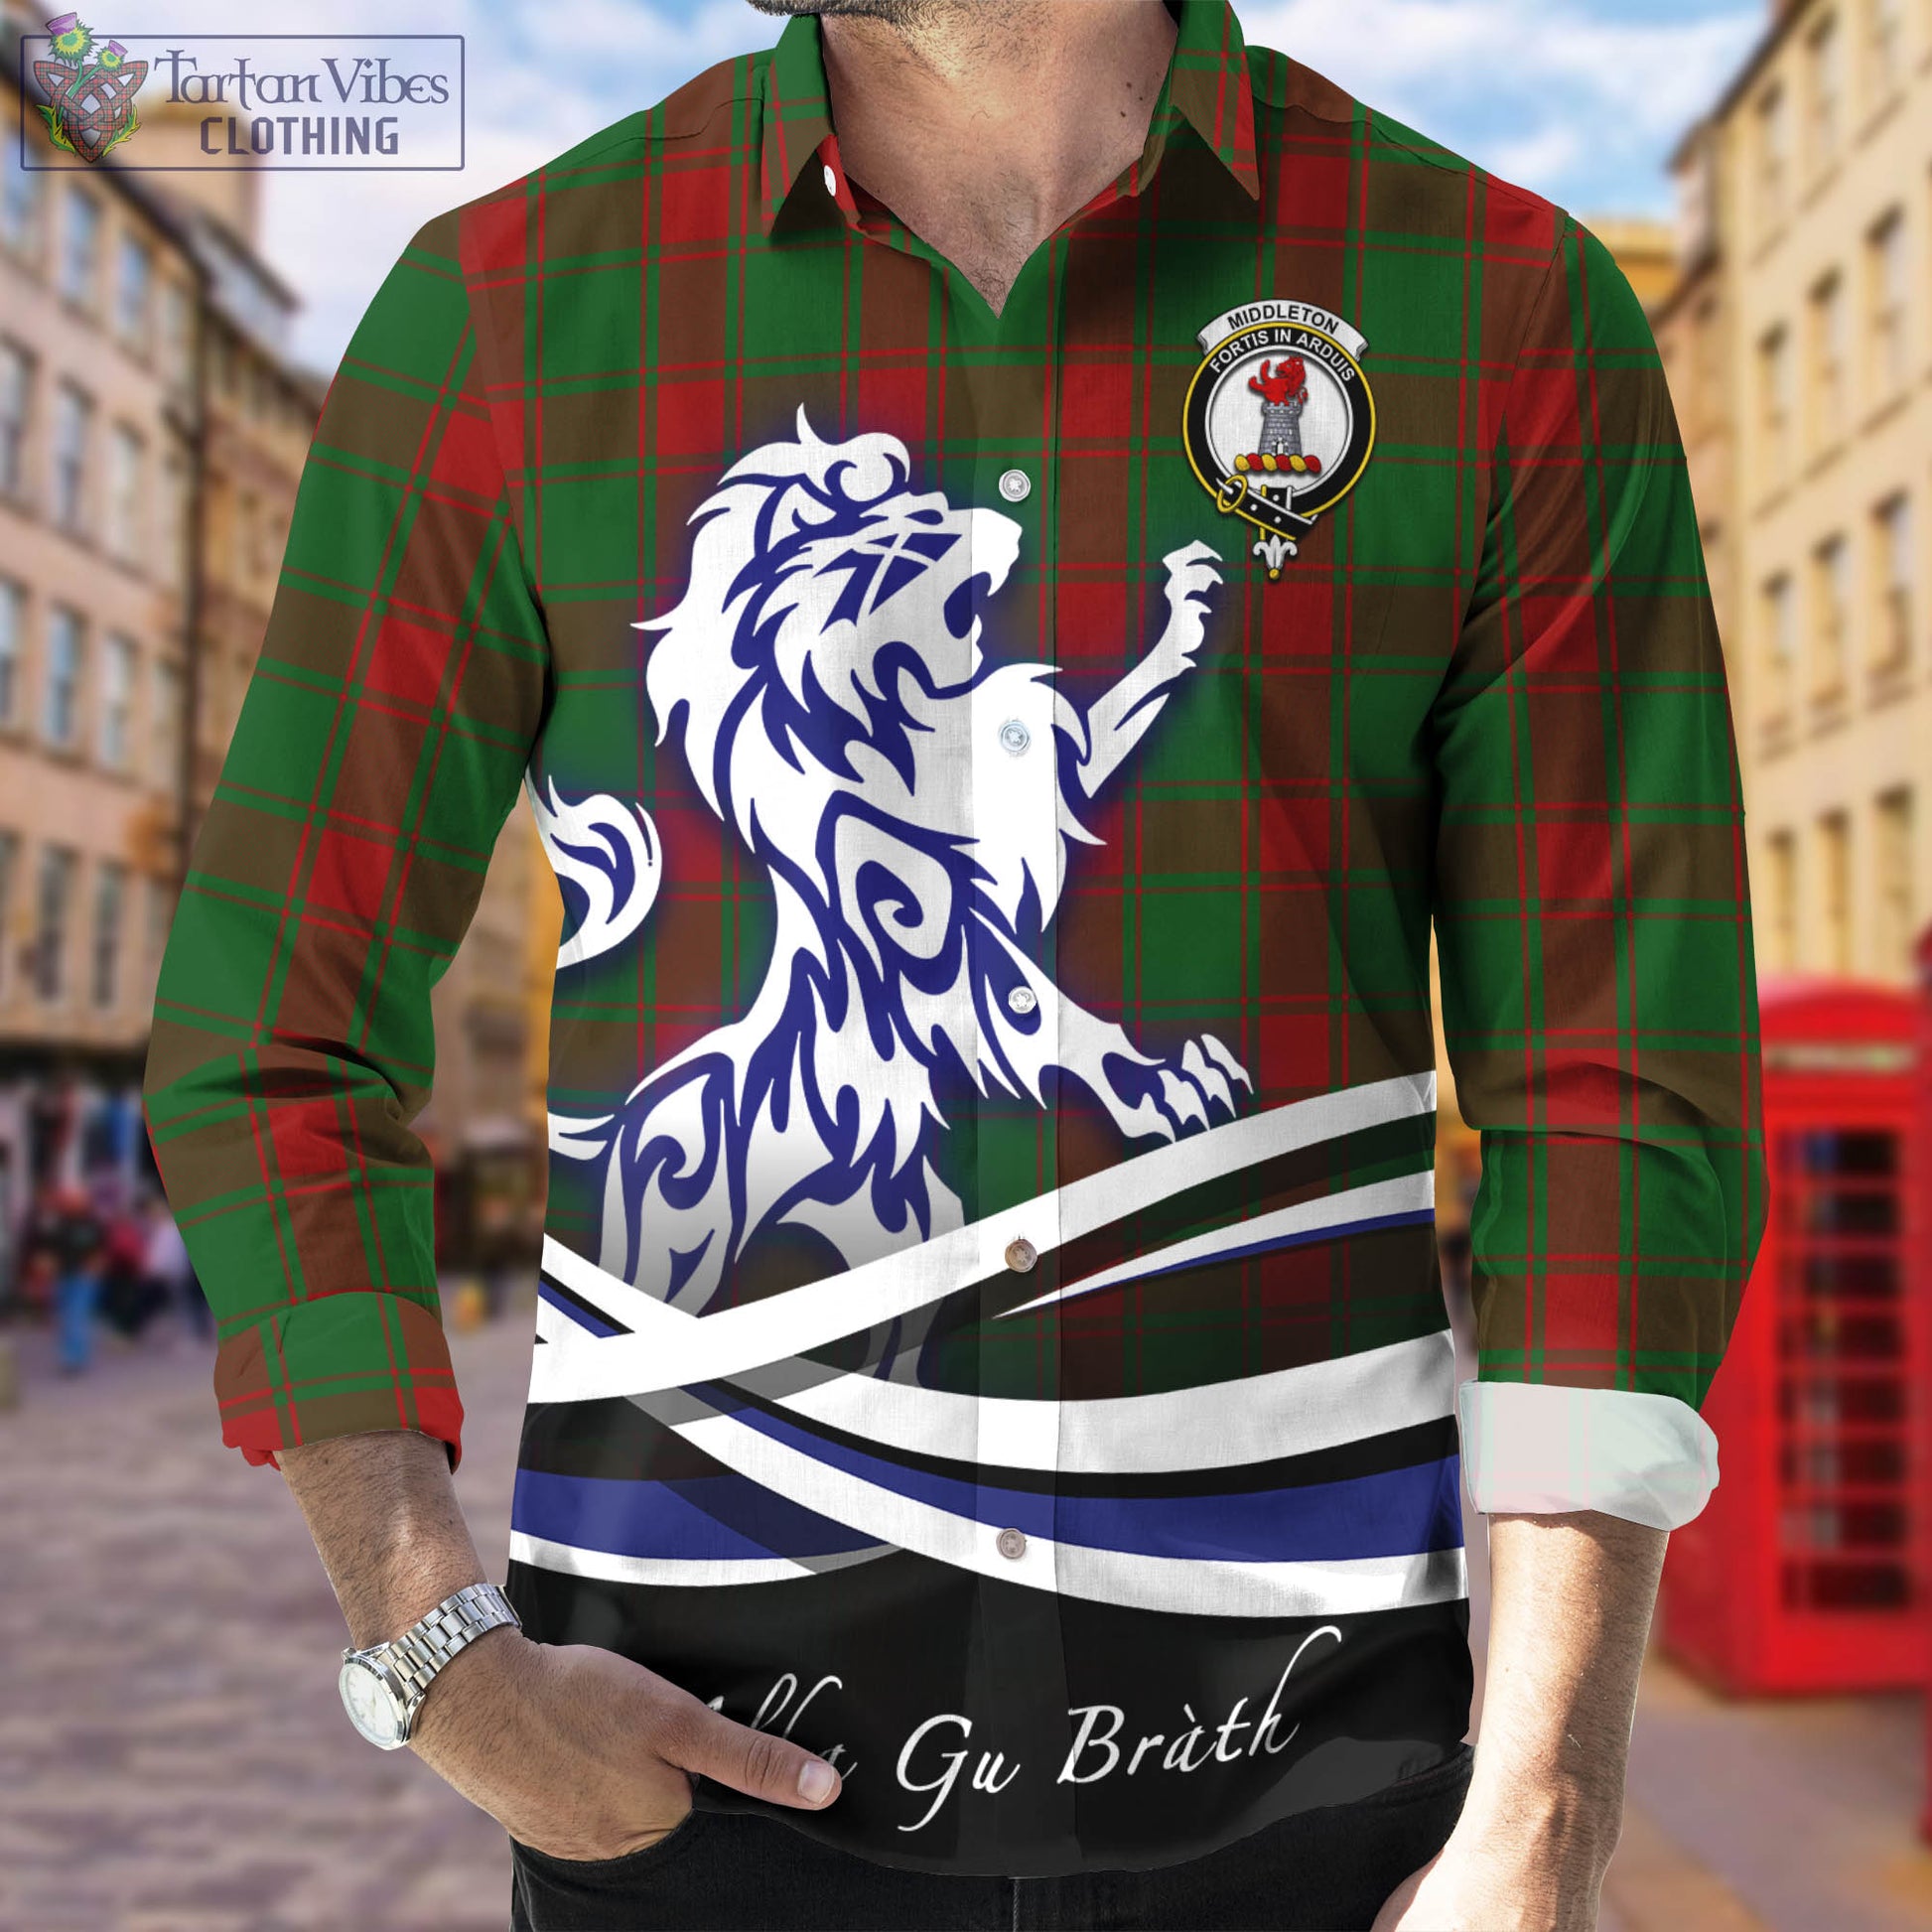 middleton-tartan-long-sleeve-button-up-shirt-with-alba-gu-brath-regal-lion-emblem